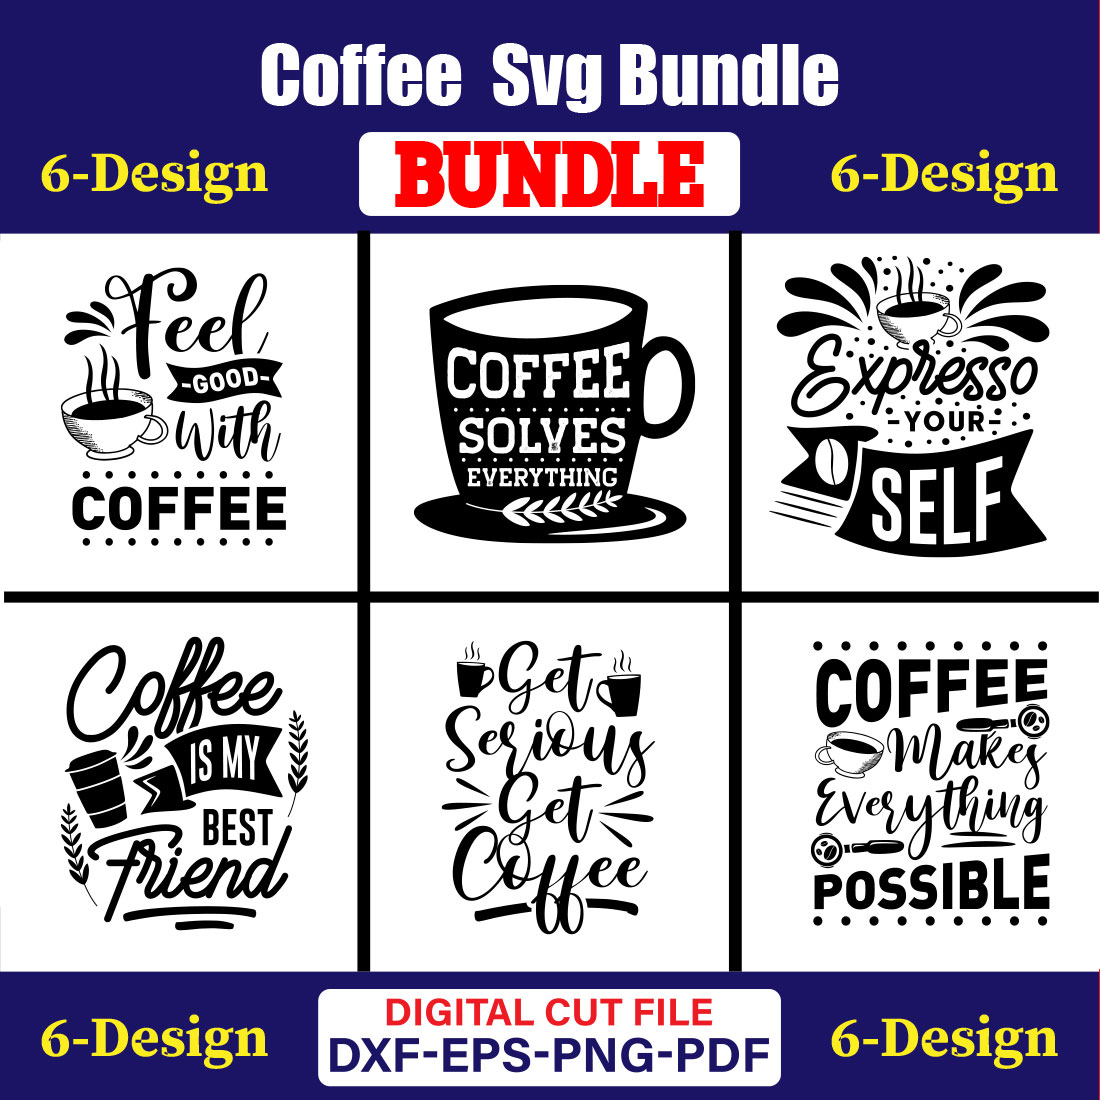 Coffee T-shirt Design Bundle Vol-11 cover image.